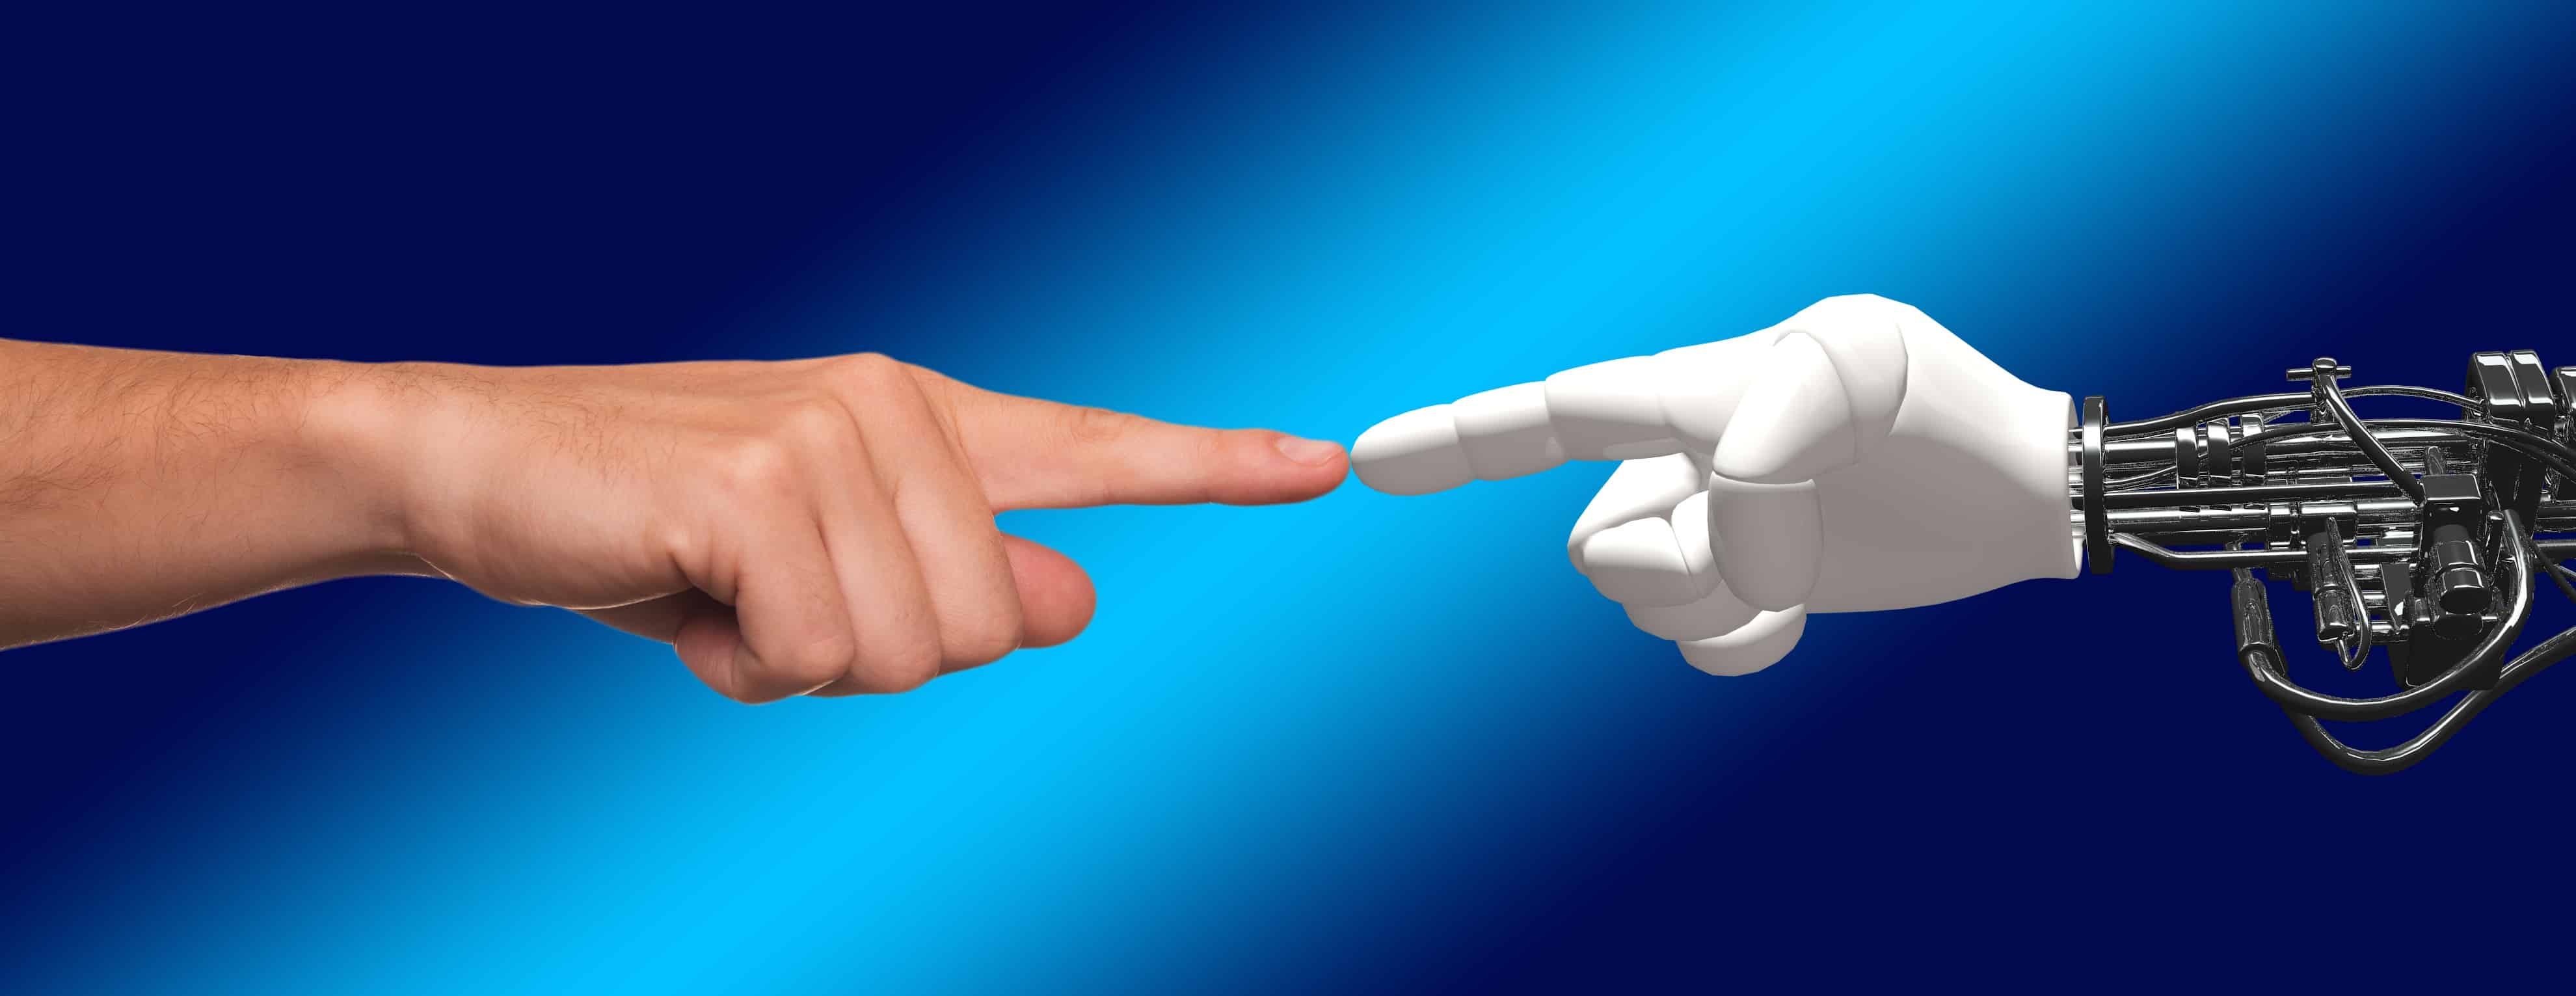 AI will create more jobs